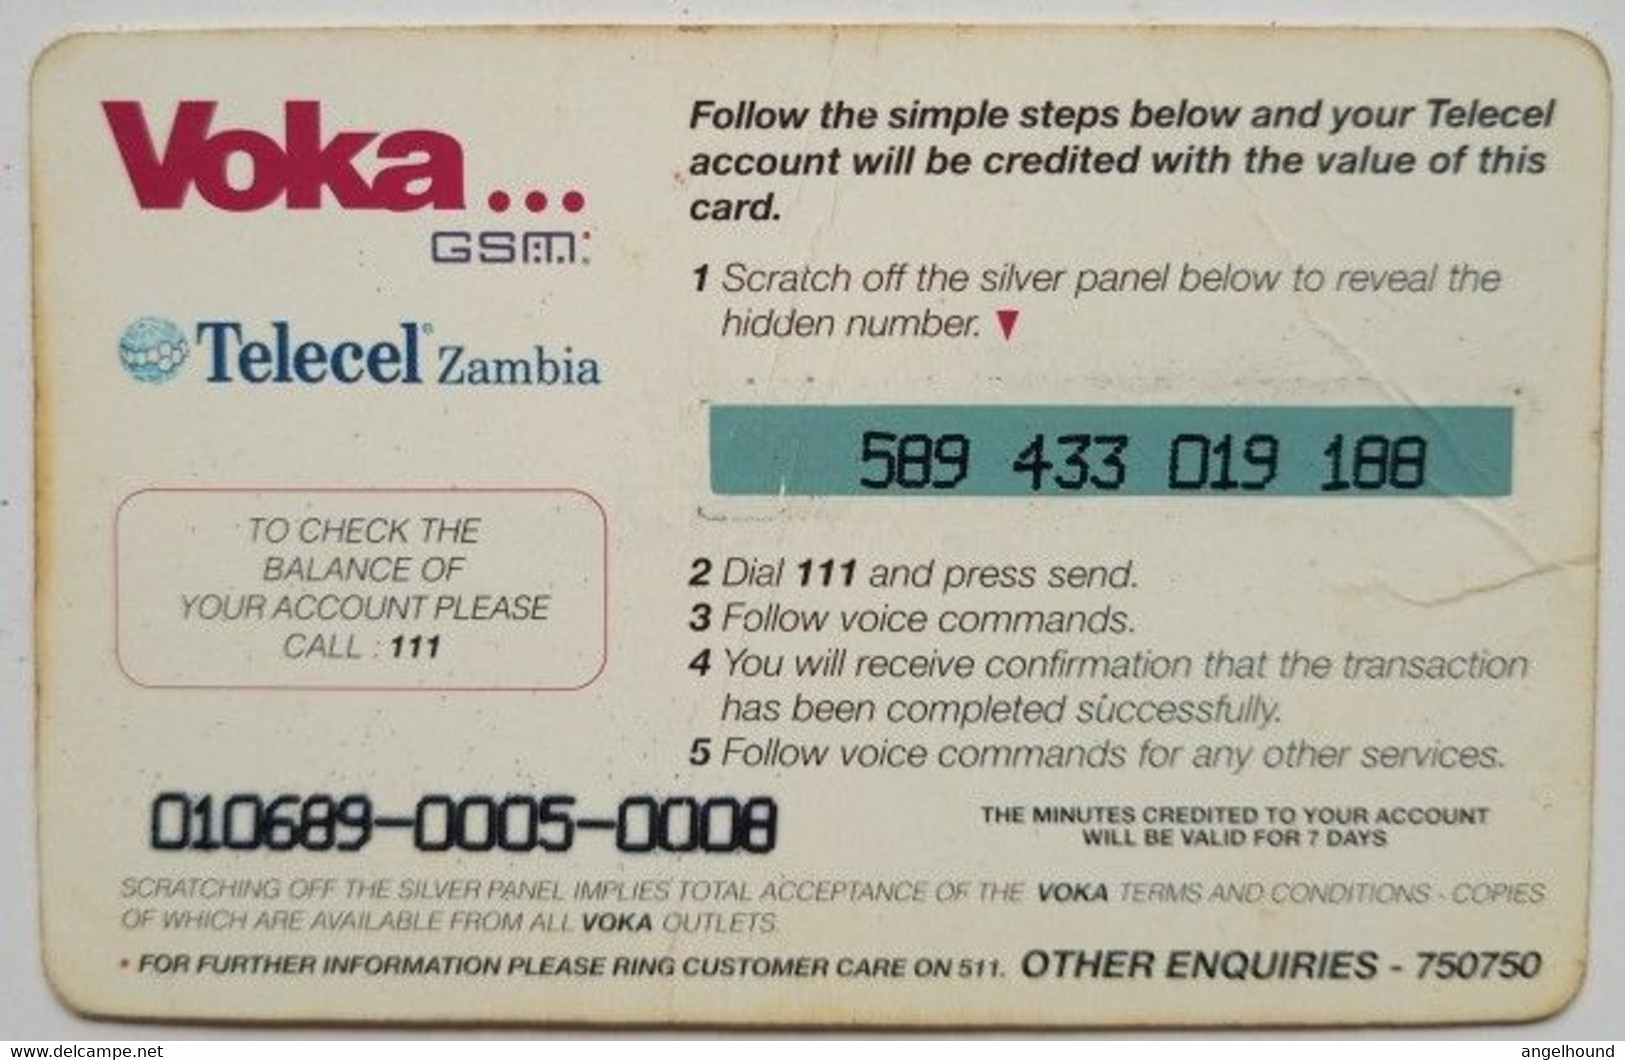 Telecel Zambia US$5 Talk Voka - Zambia